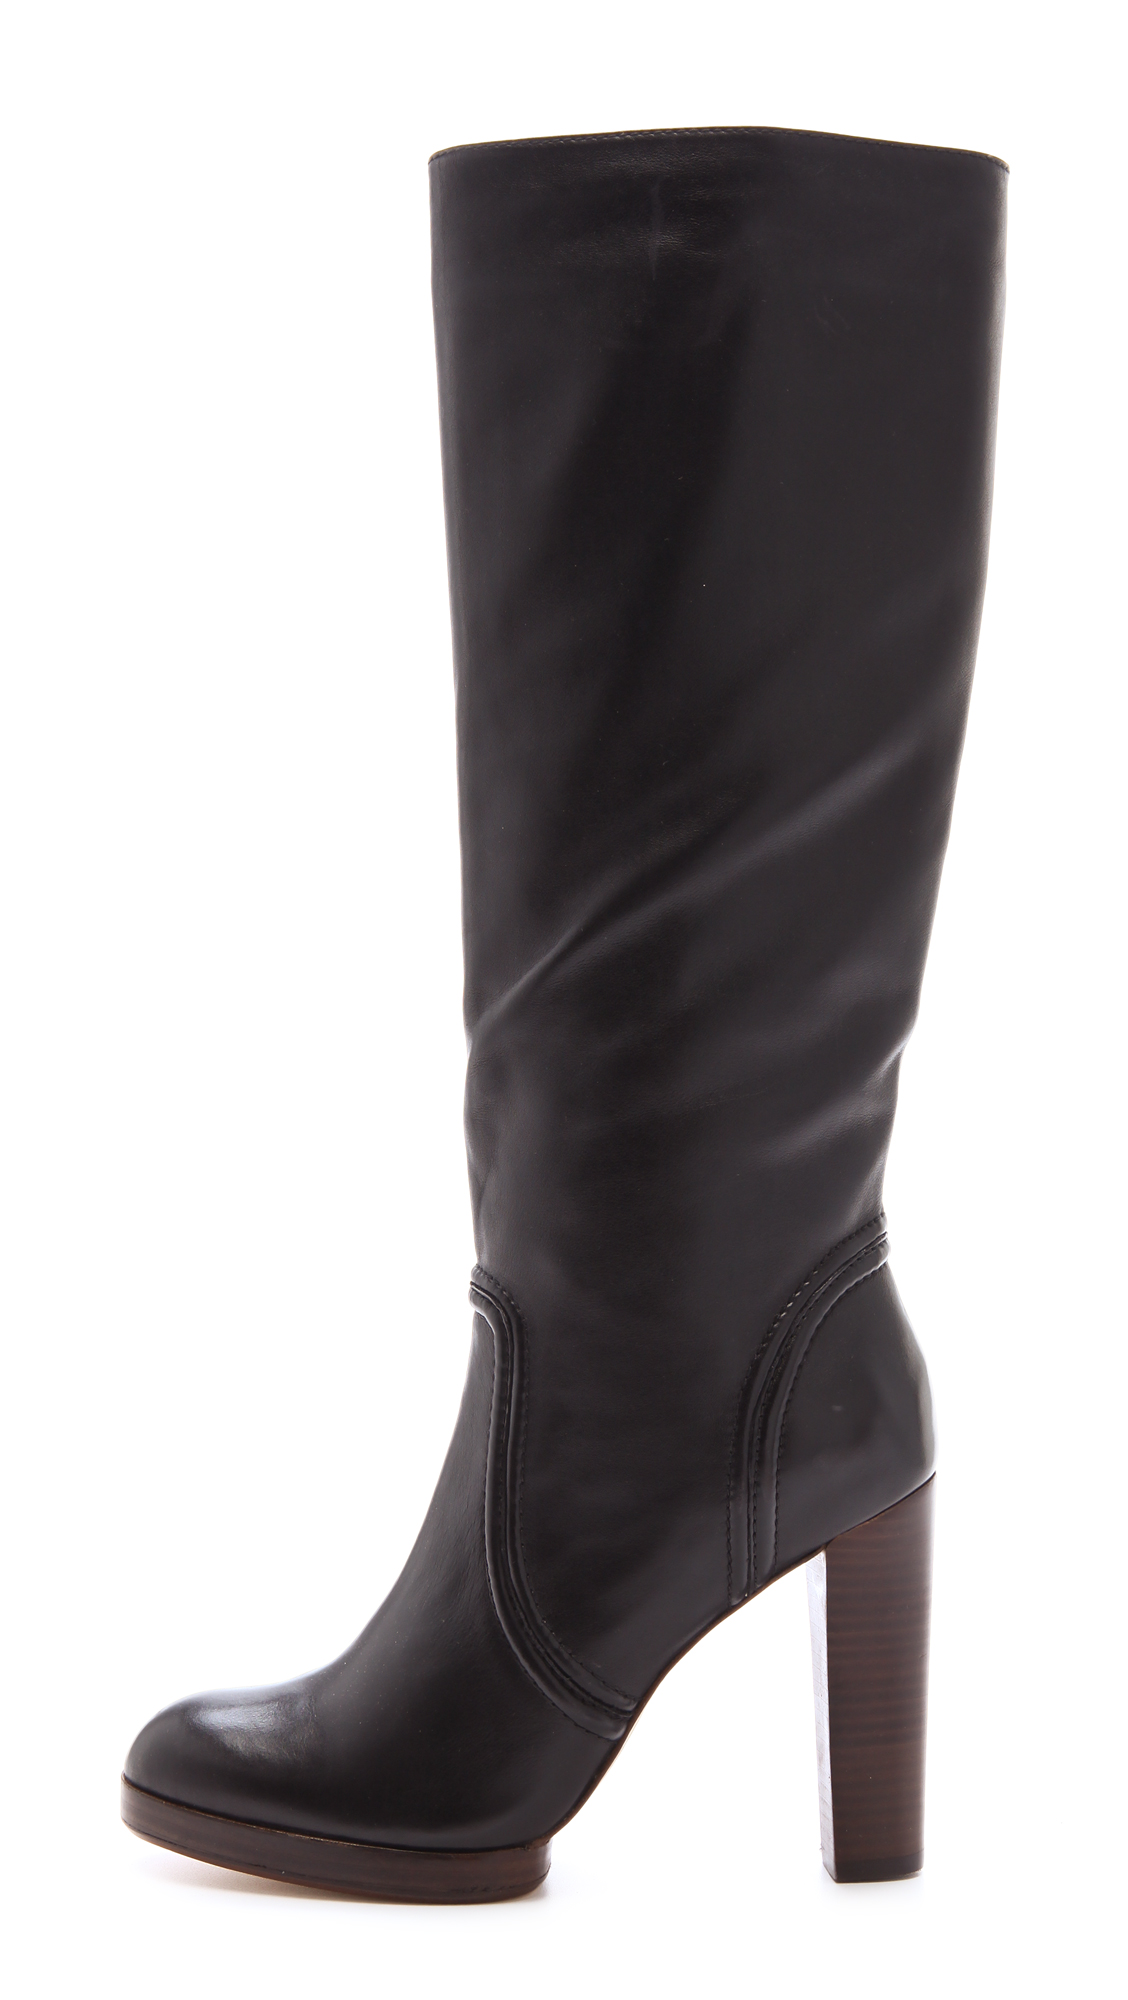 Lyst - Kors By Michael Kors Aila High Heel Boots in Black